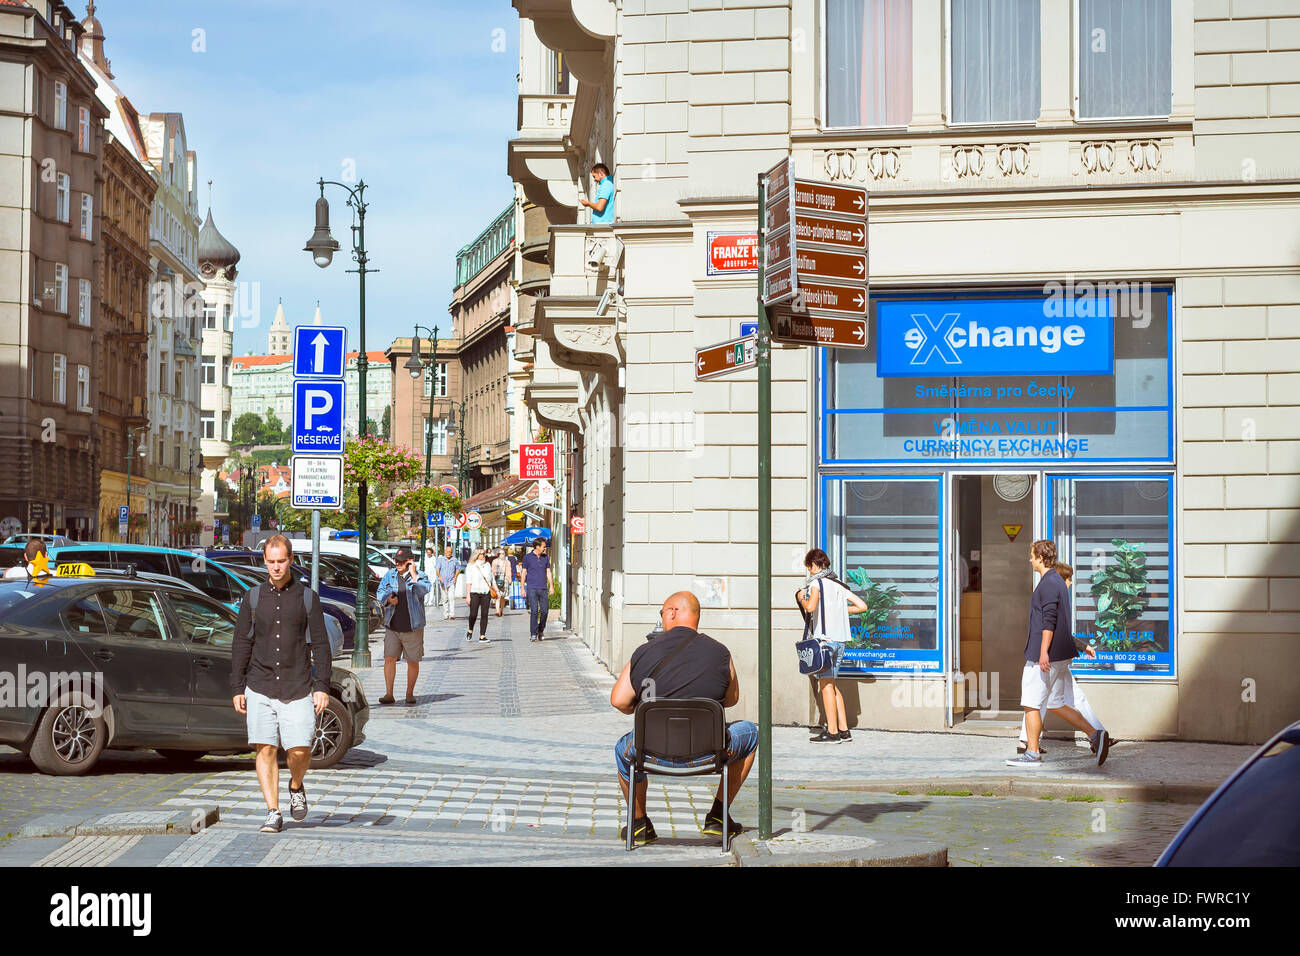 PRAGUE, CZECH REPUBLIC - AUGUST 27, 2015: Currency exchange office in the old town of Prague, Czech Republic Stock Photo